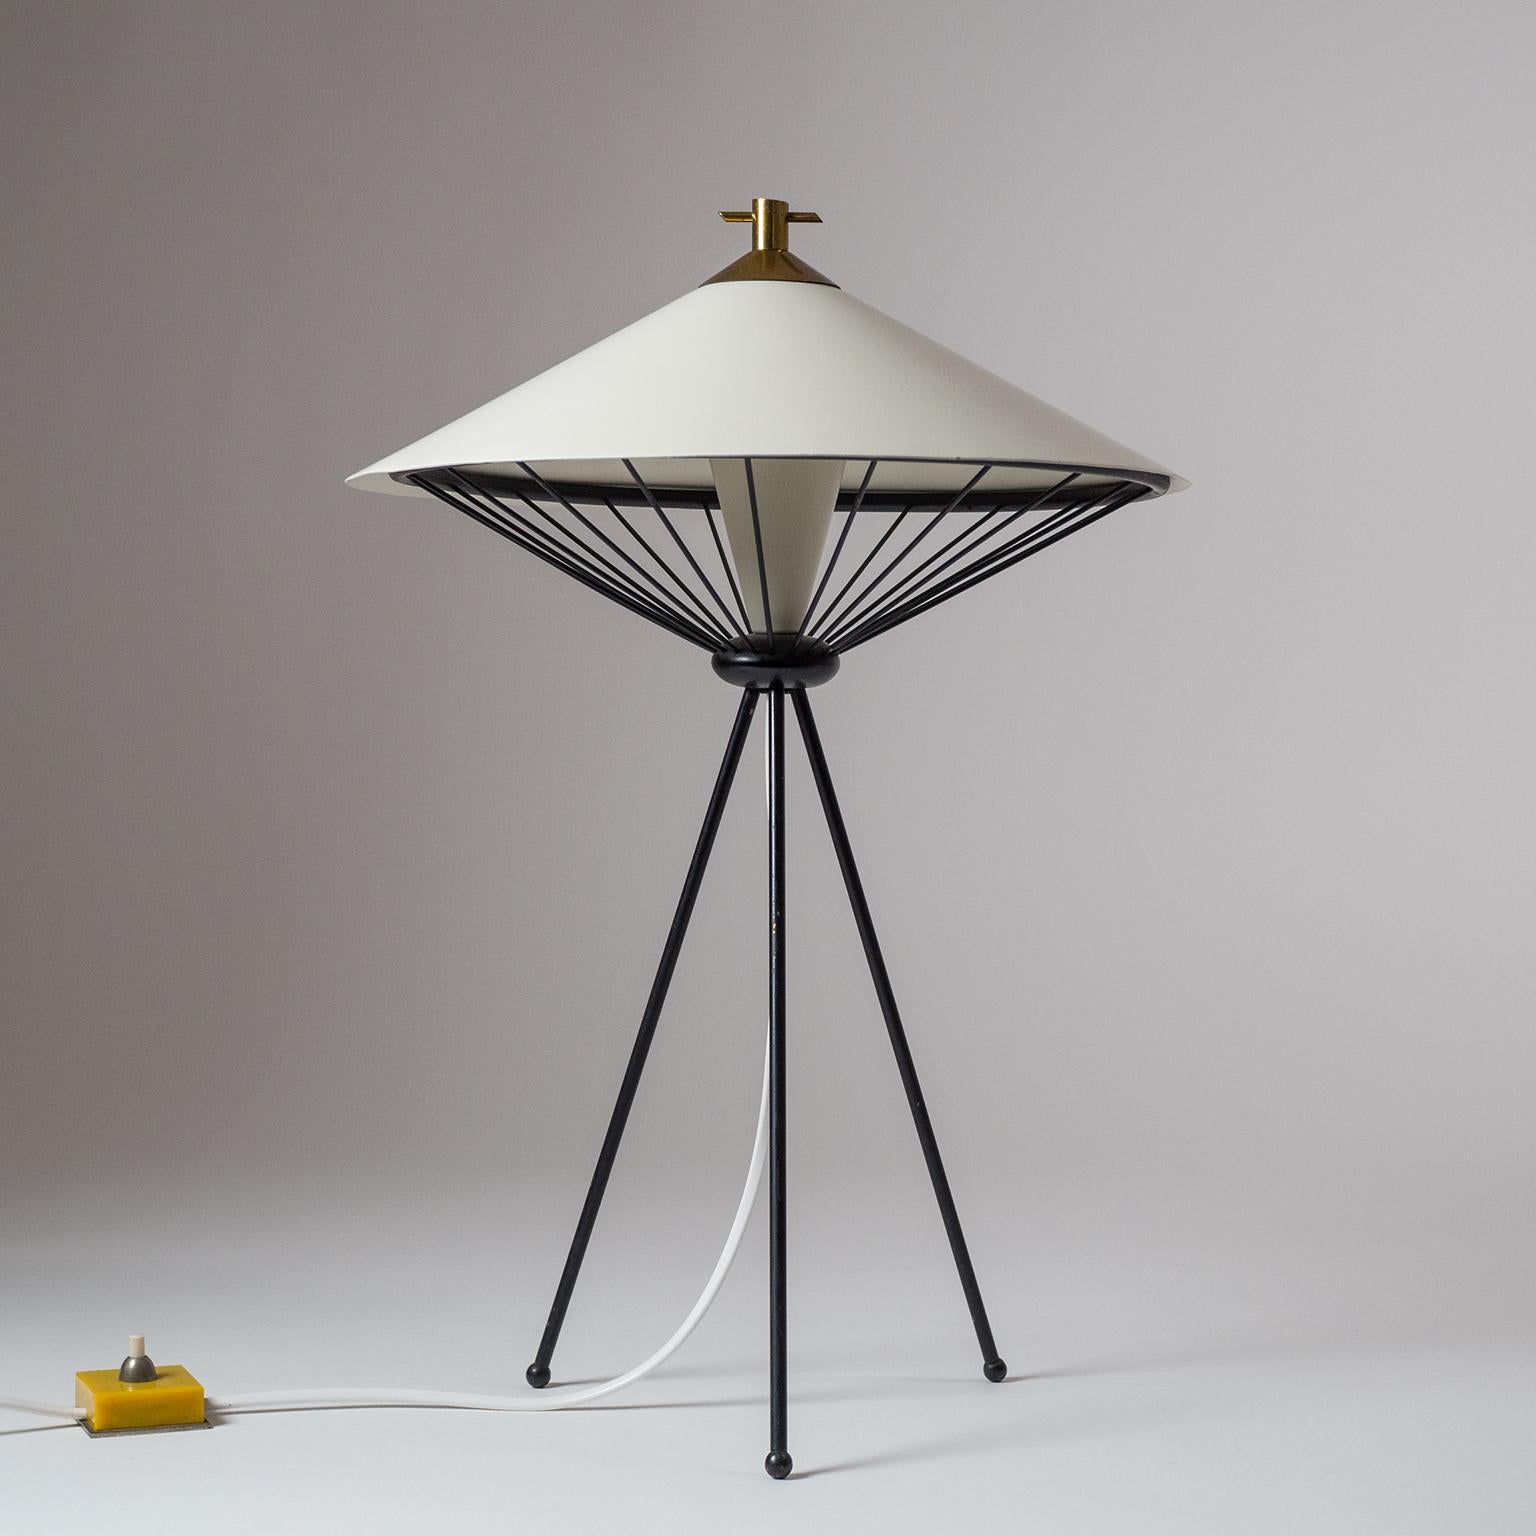 Modernist Italian Tripod Table Lamp, 1950s (Moderne der Mitte des Jahrhunderts)